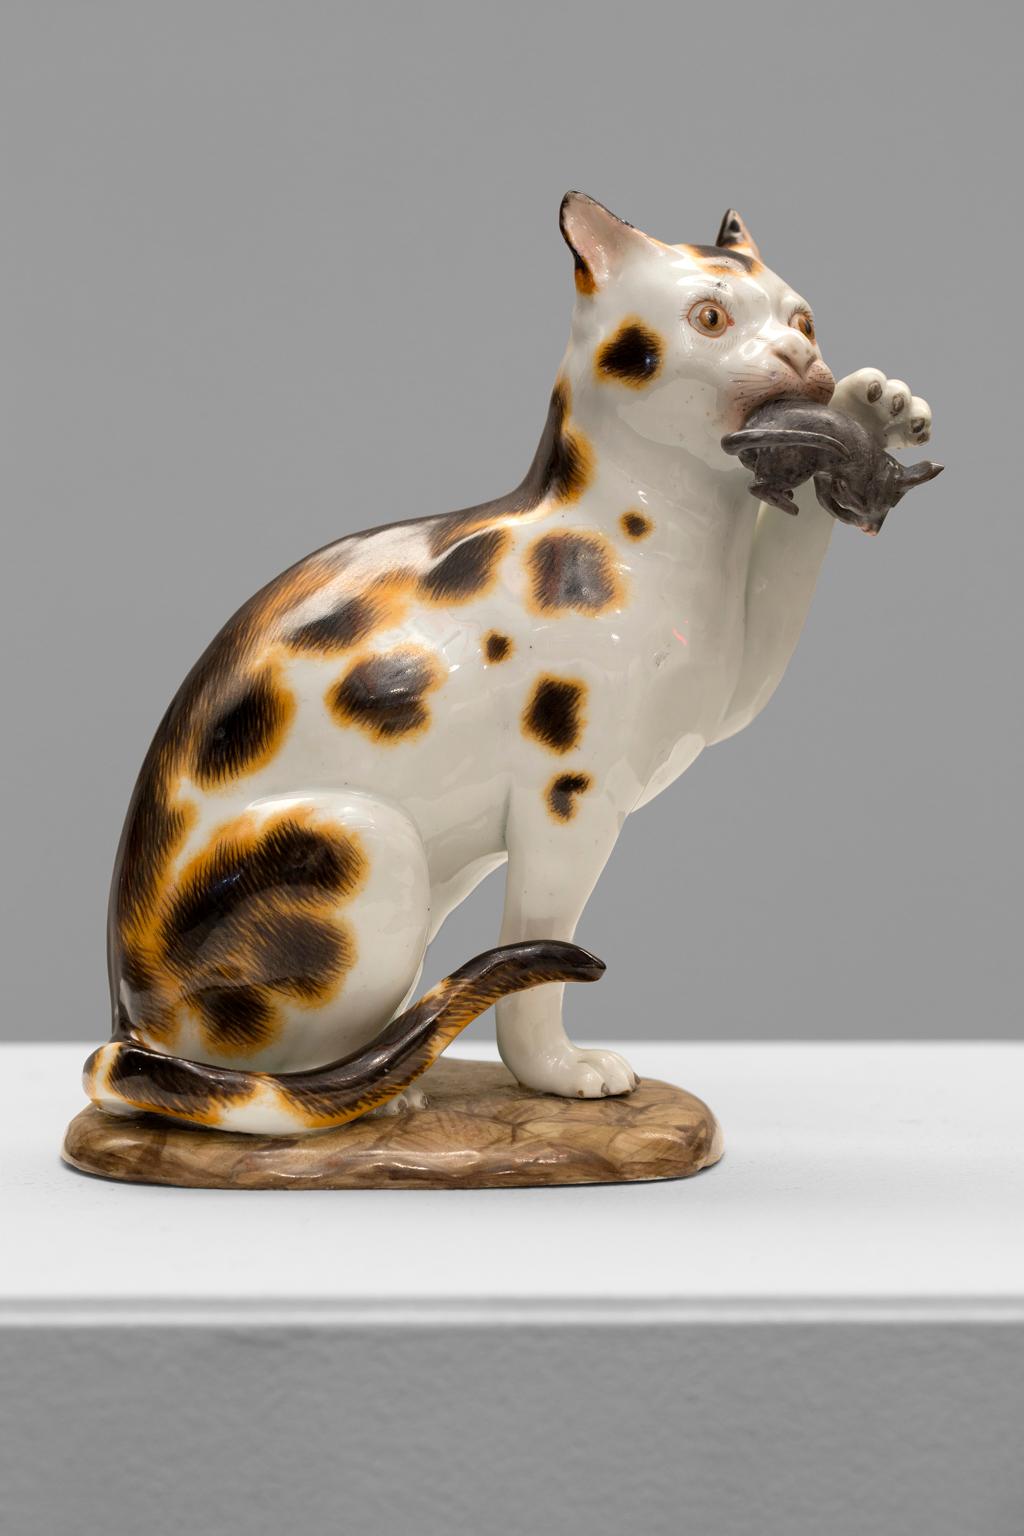 Charming Meissen Porcelain Cat and Mouse Figurine, Circa 19th Century - Sculpture by Meissen Porcelain (Manufacturer)